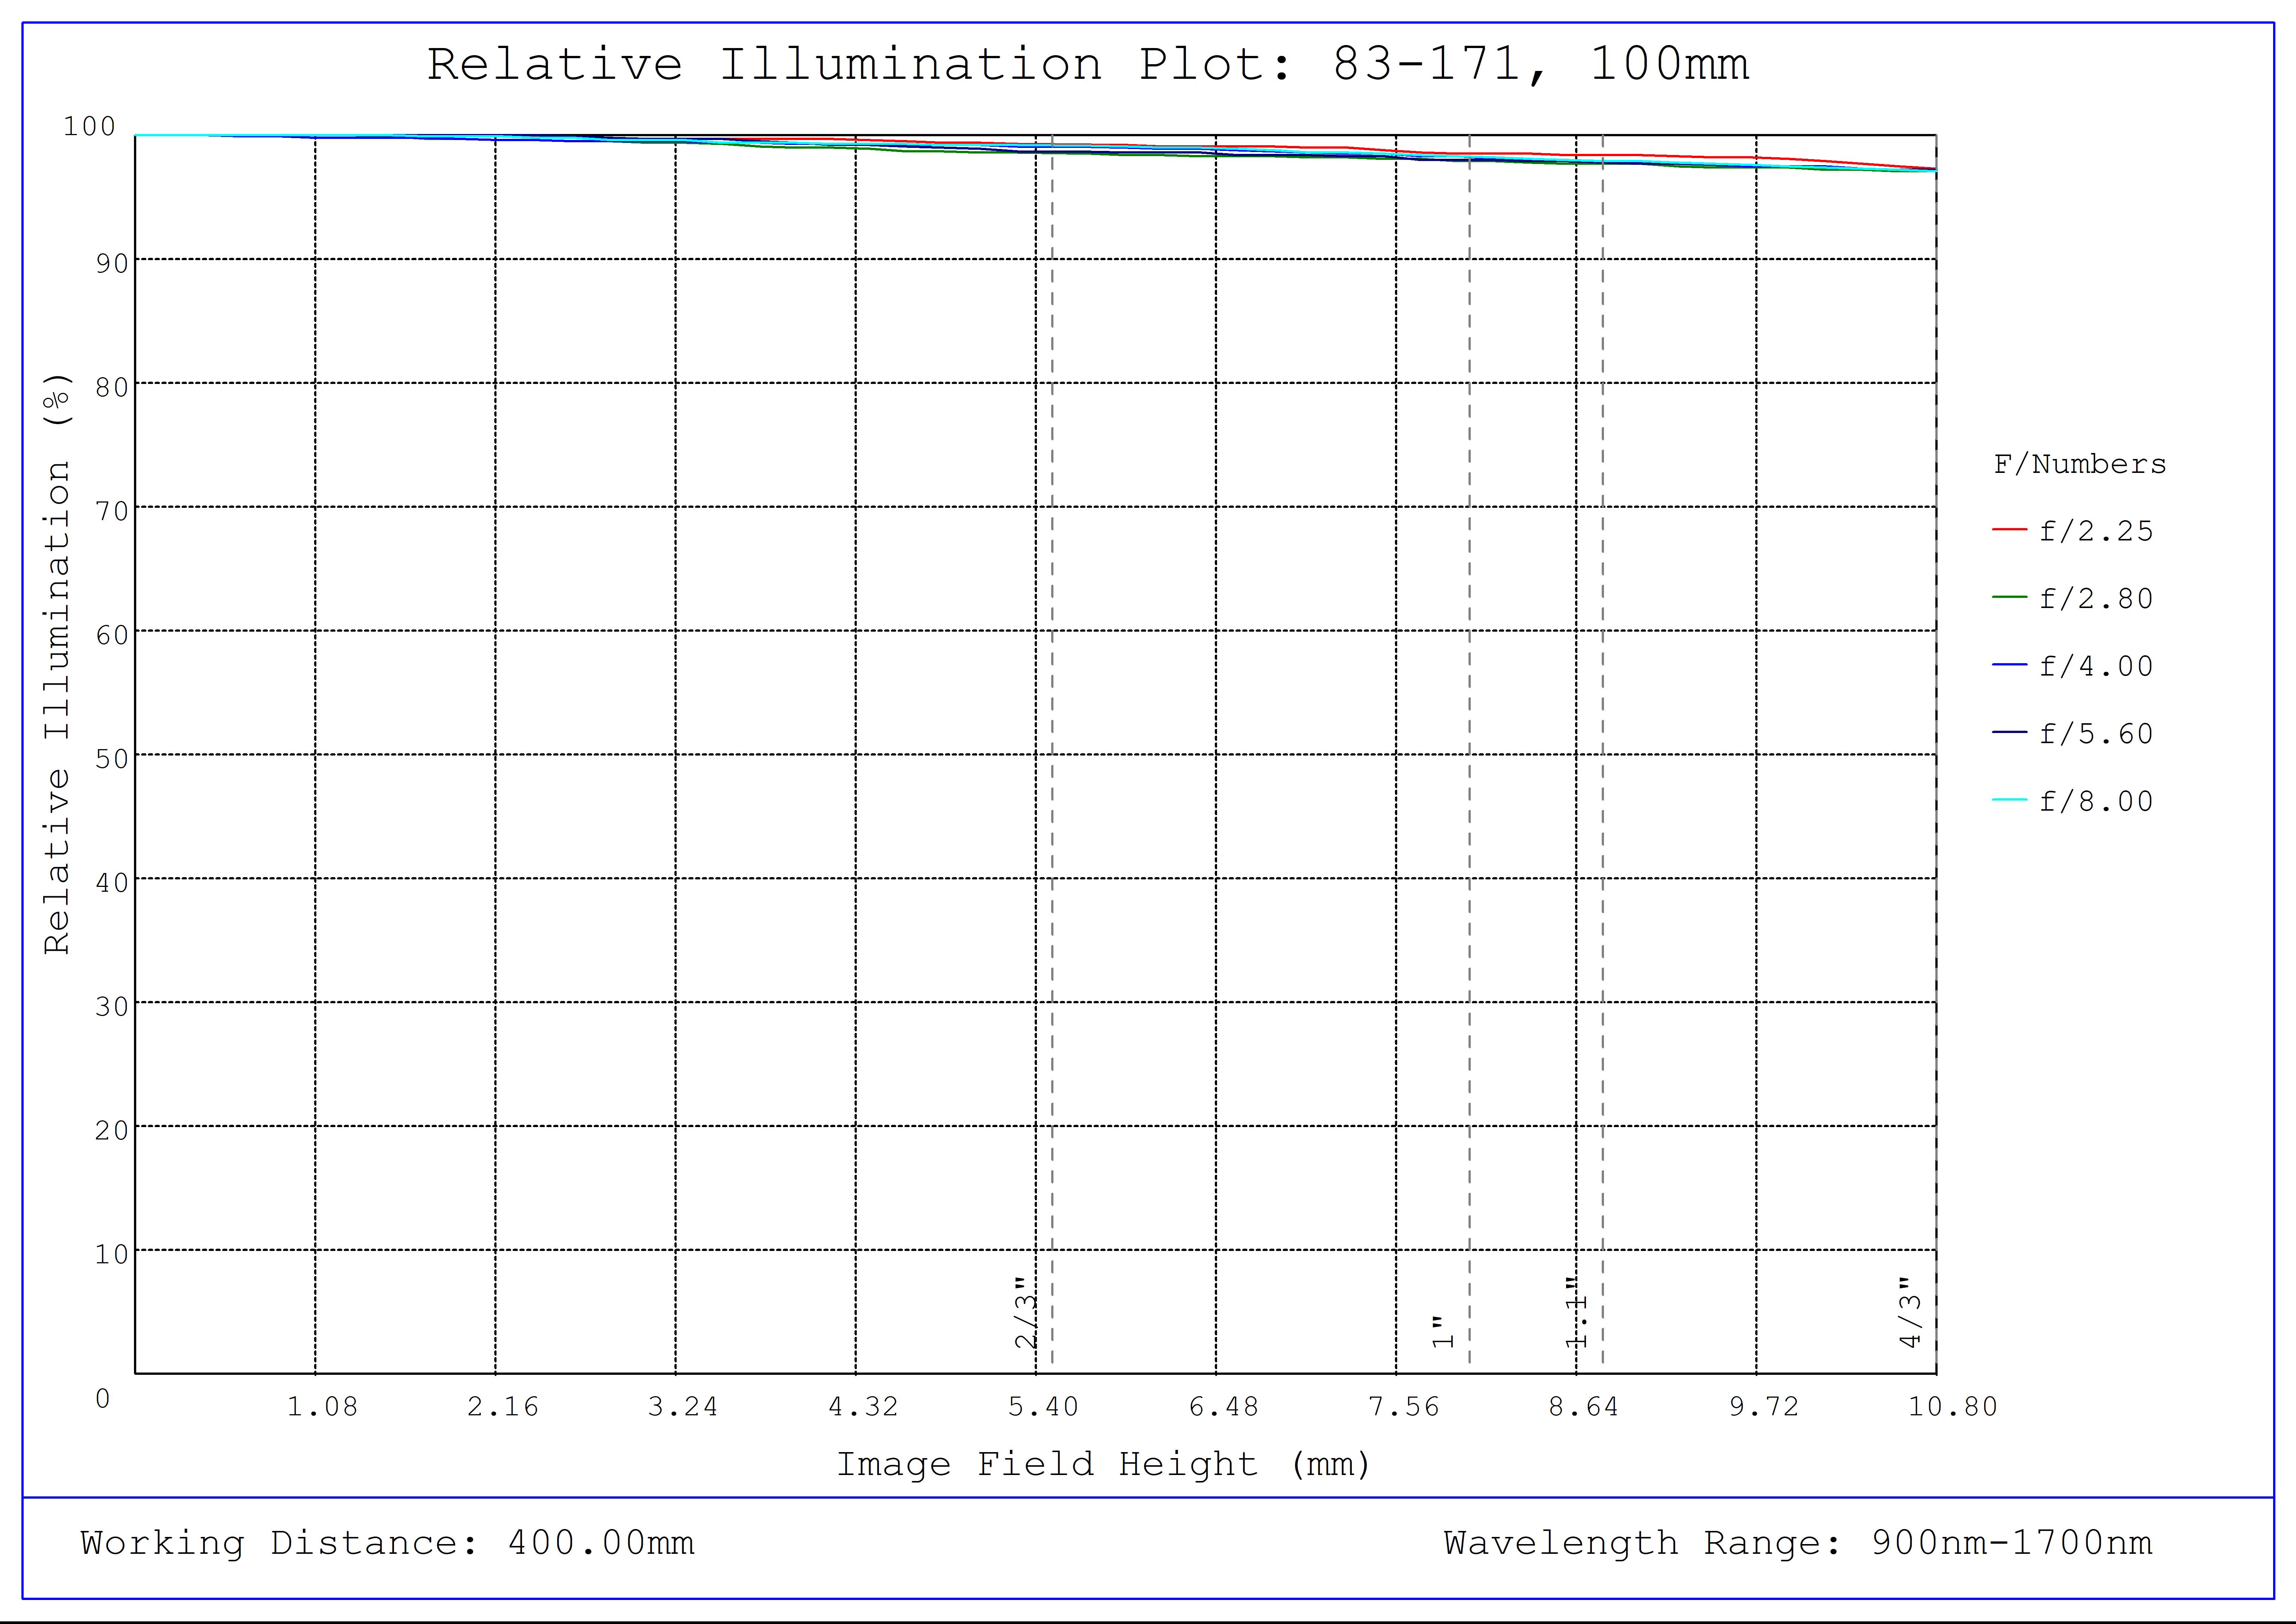 #83-171, 100mm SWIR Series Fixed Focal Length Lens, F-Mount, Relative Illumination Plot